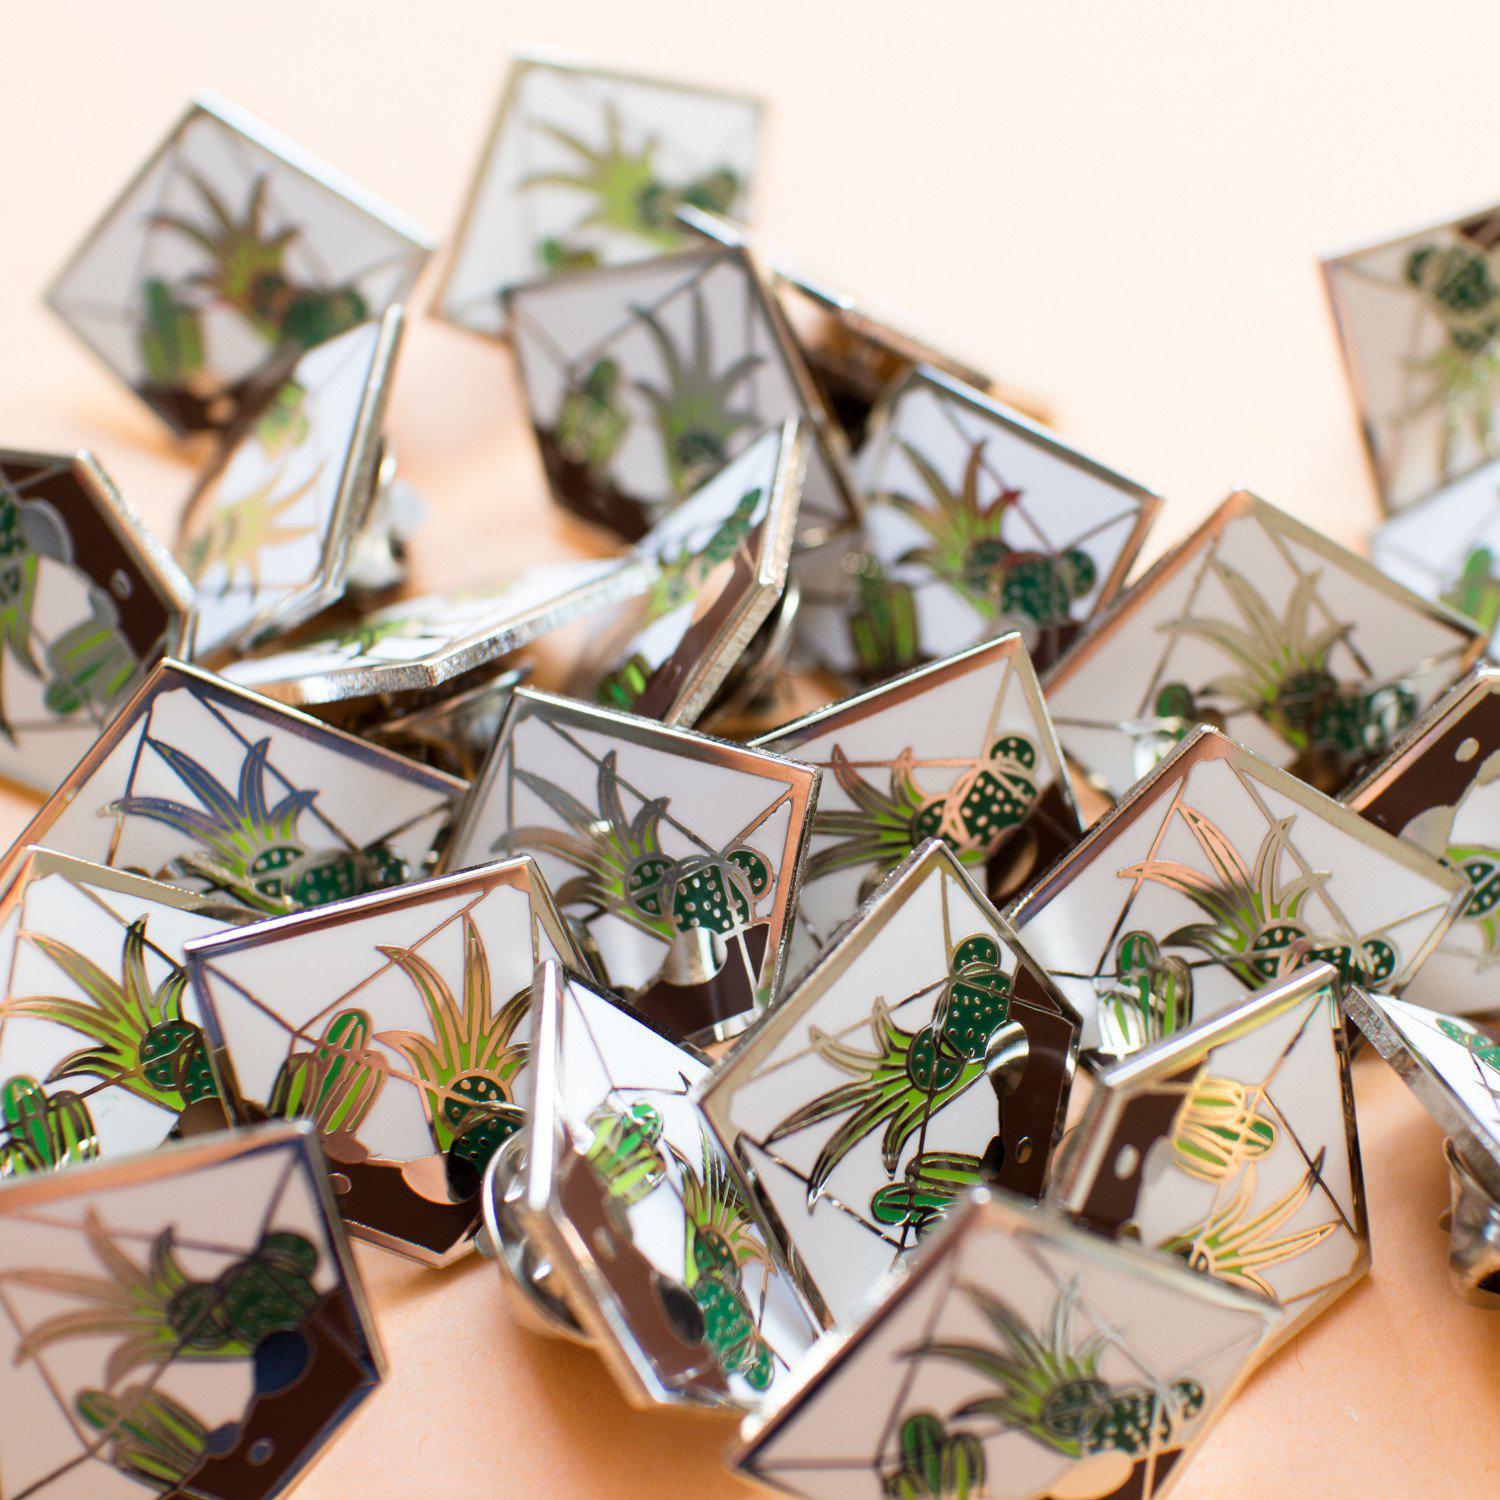 Diamond Terrarium Enamel Pin - Finest Imaginary